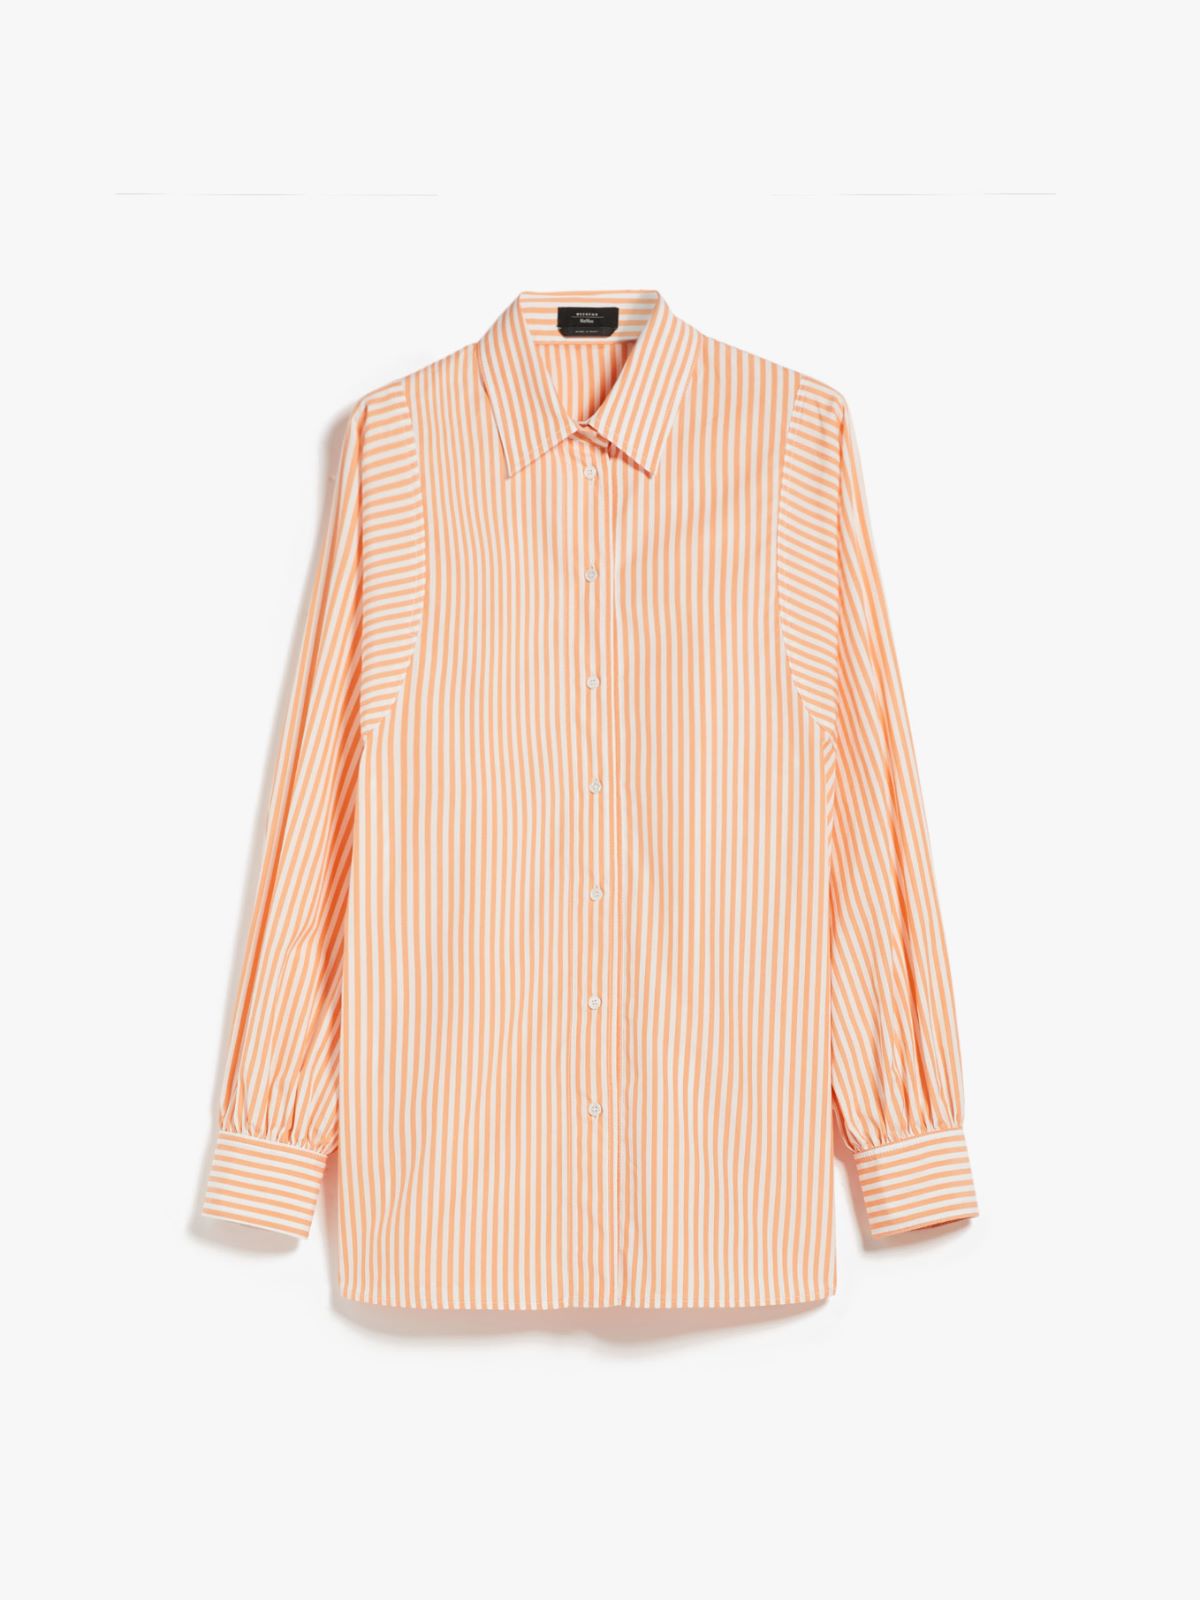 Striped cotton shirt - ORANGE - Weekend Max Mara - 6